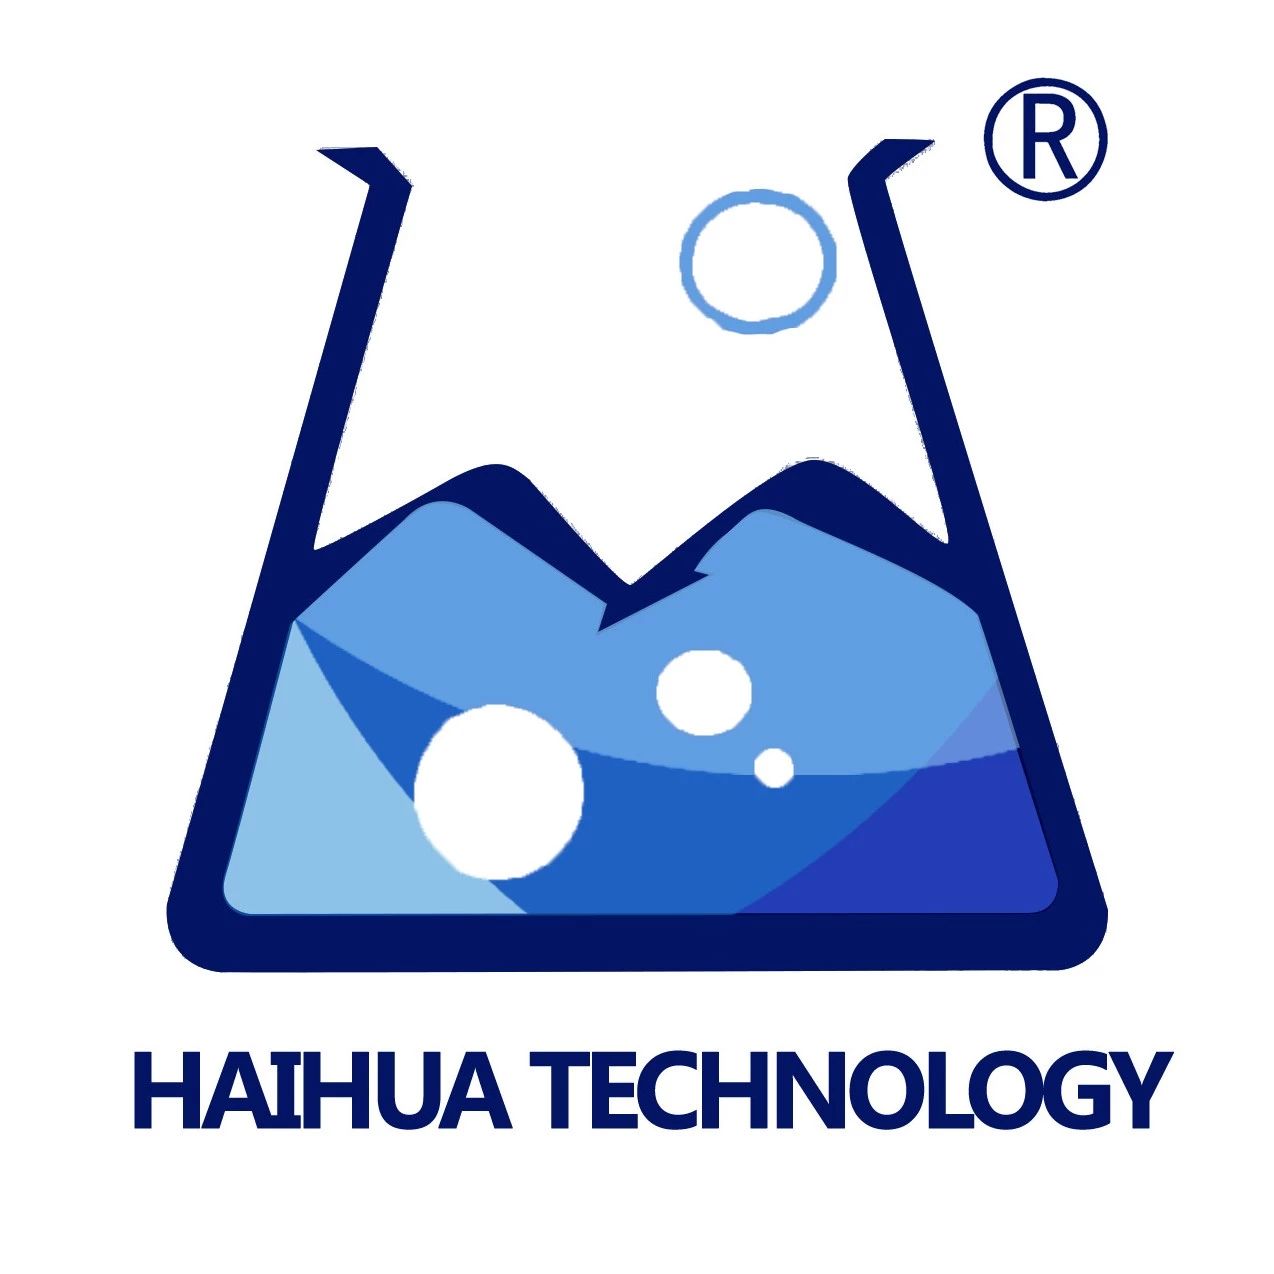 Haihua Technology | Focus on quality · Create the future